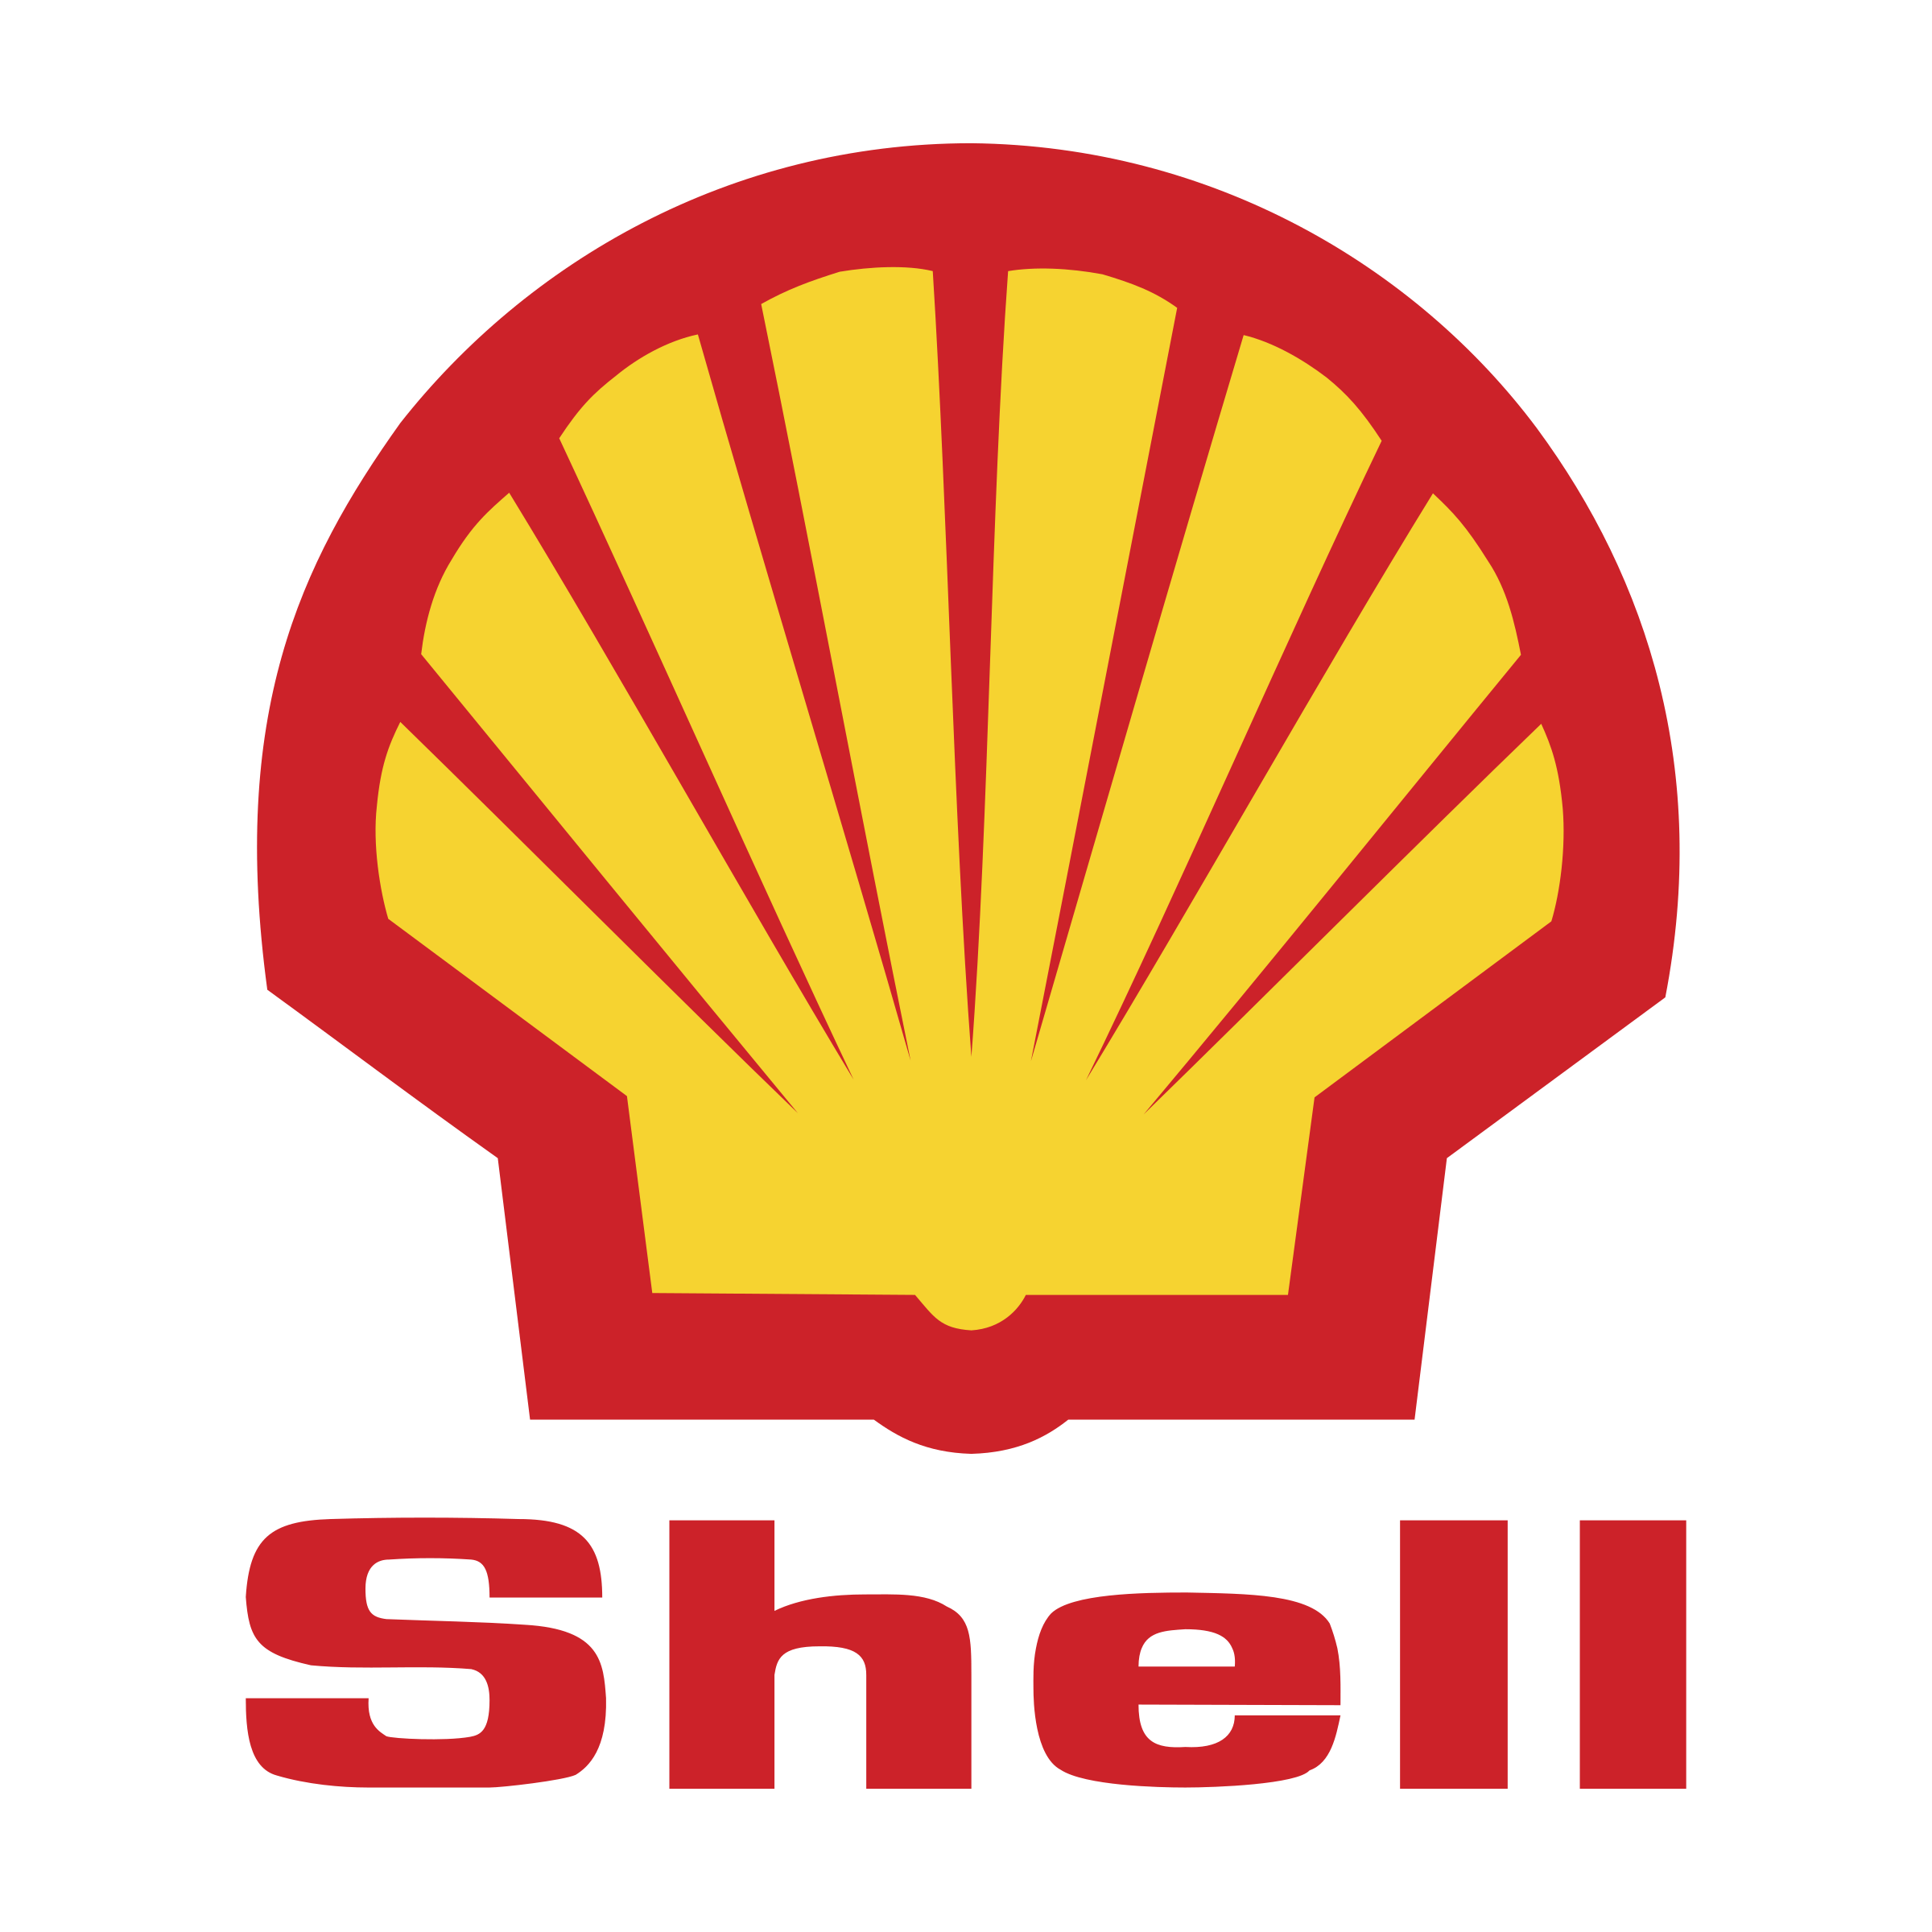 shell-logo-png-transparent